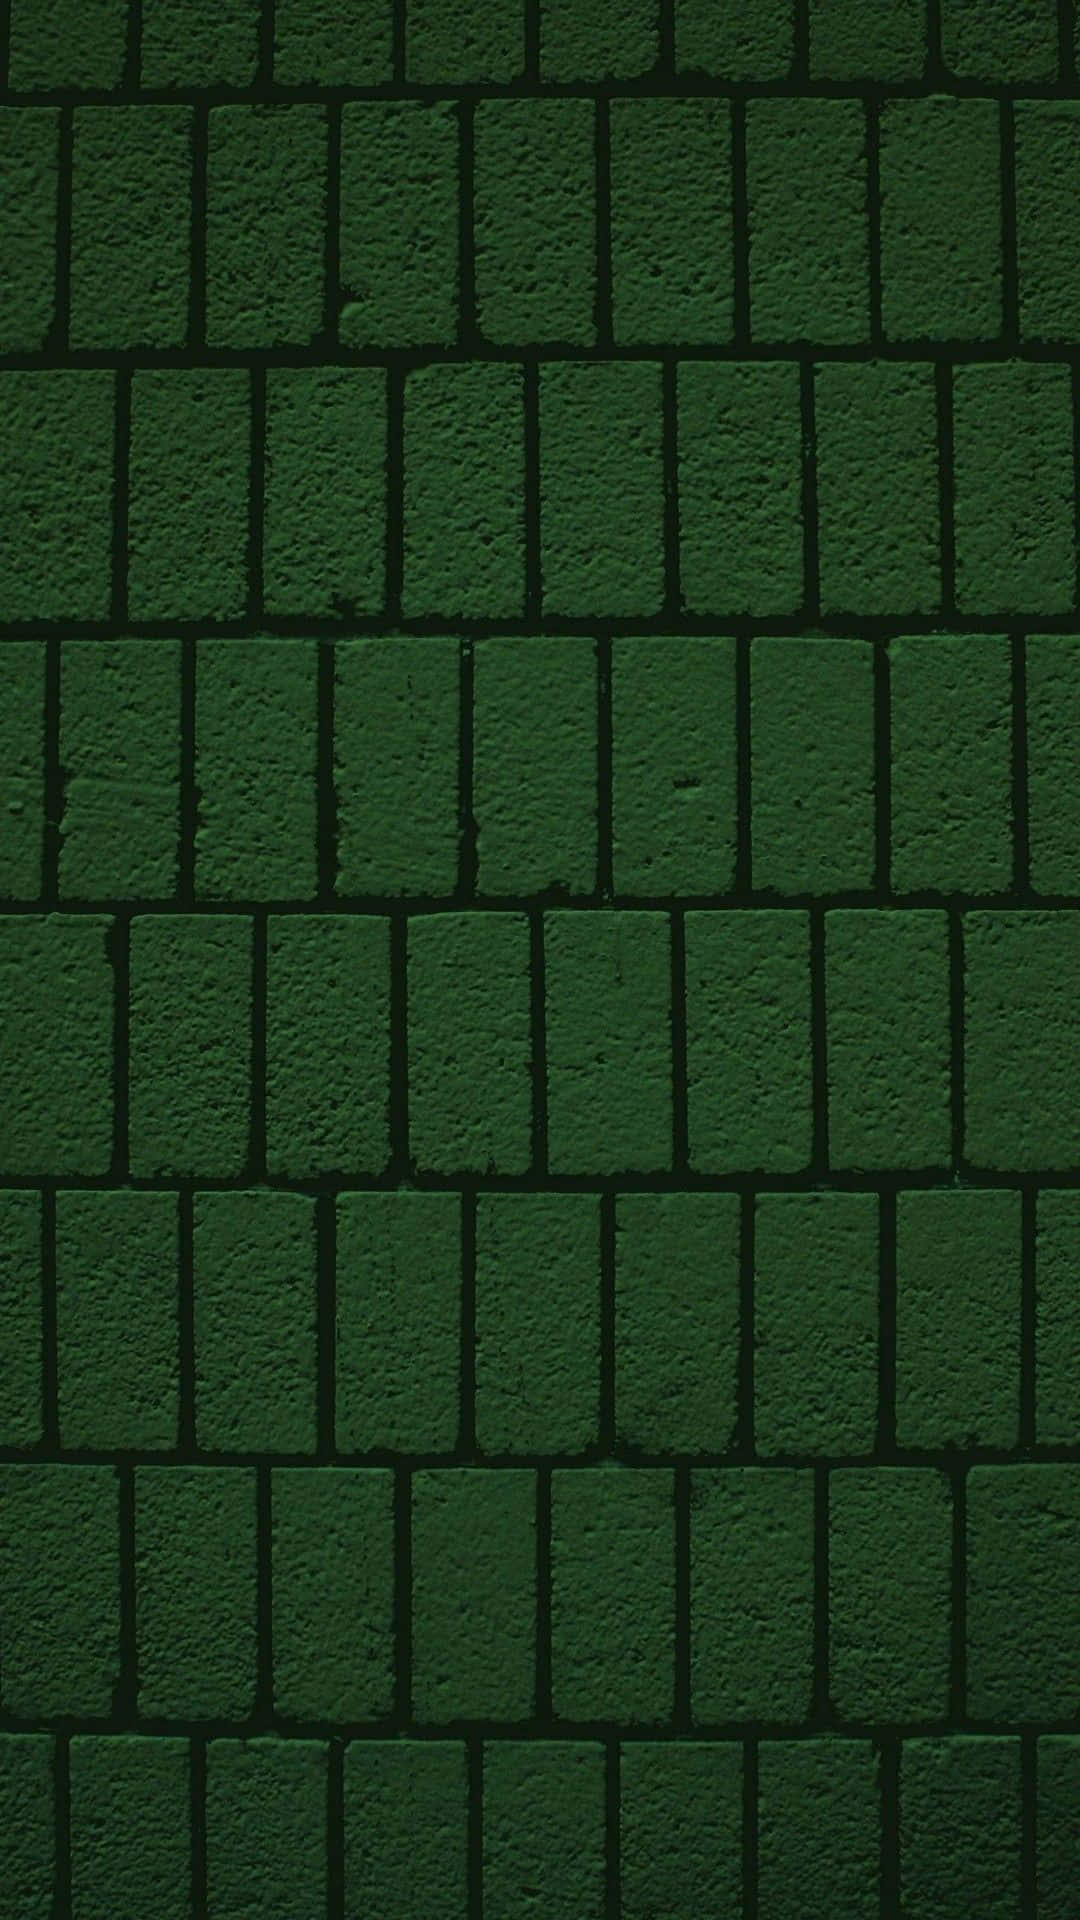 Ziegelwanddunkelgrünes Iphone Wallpaper